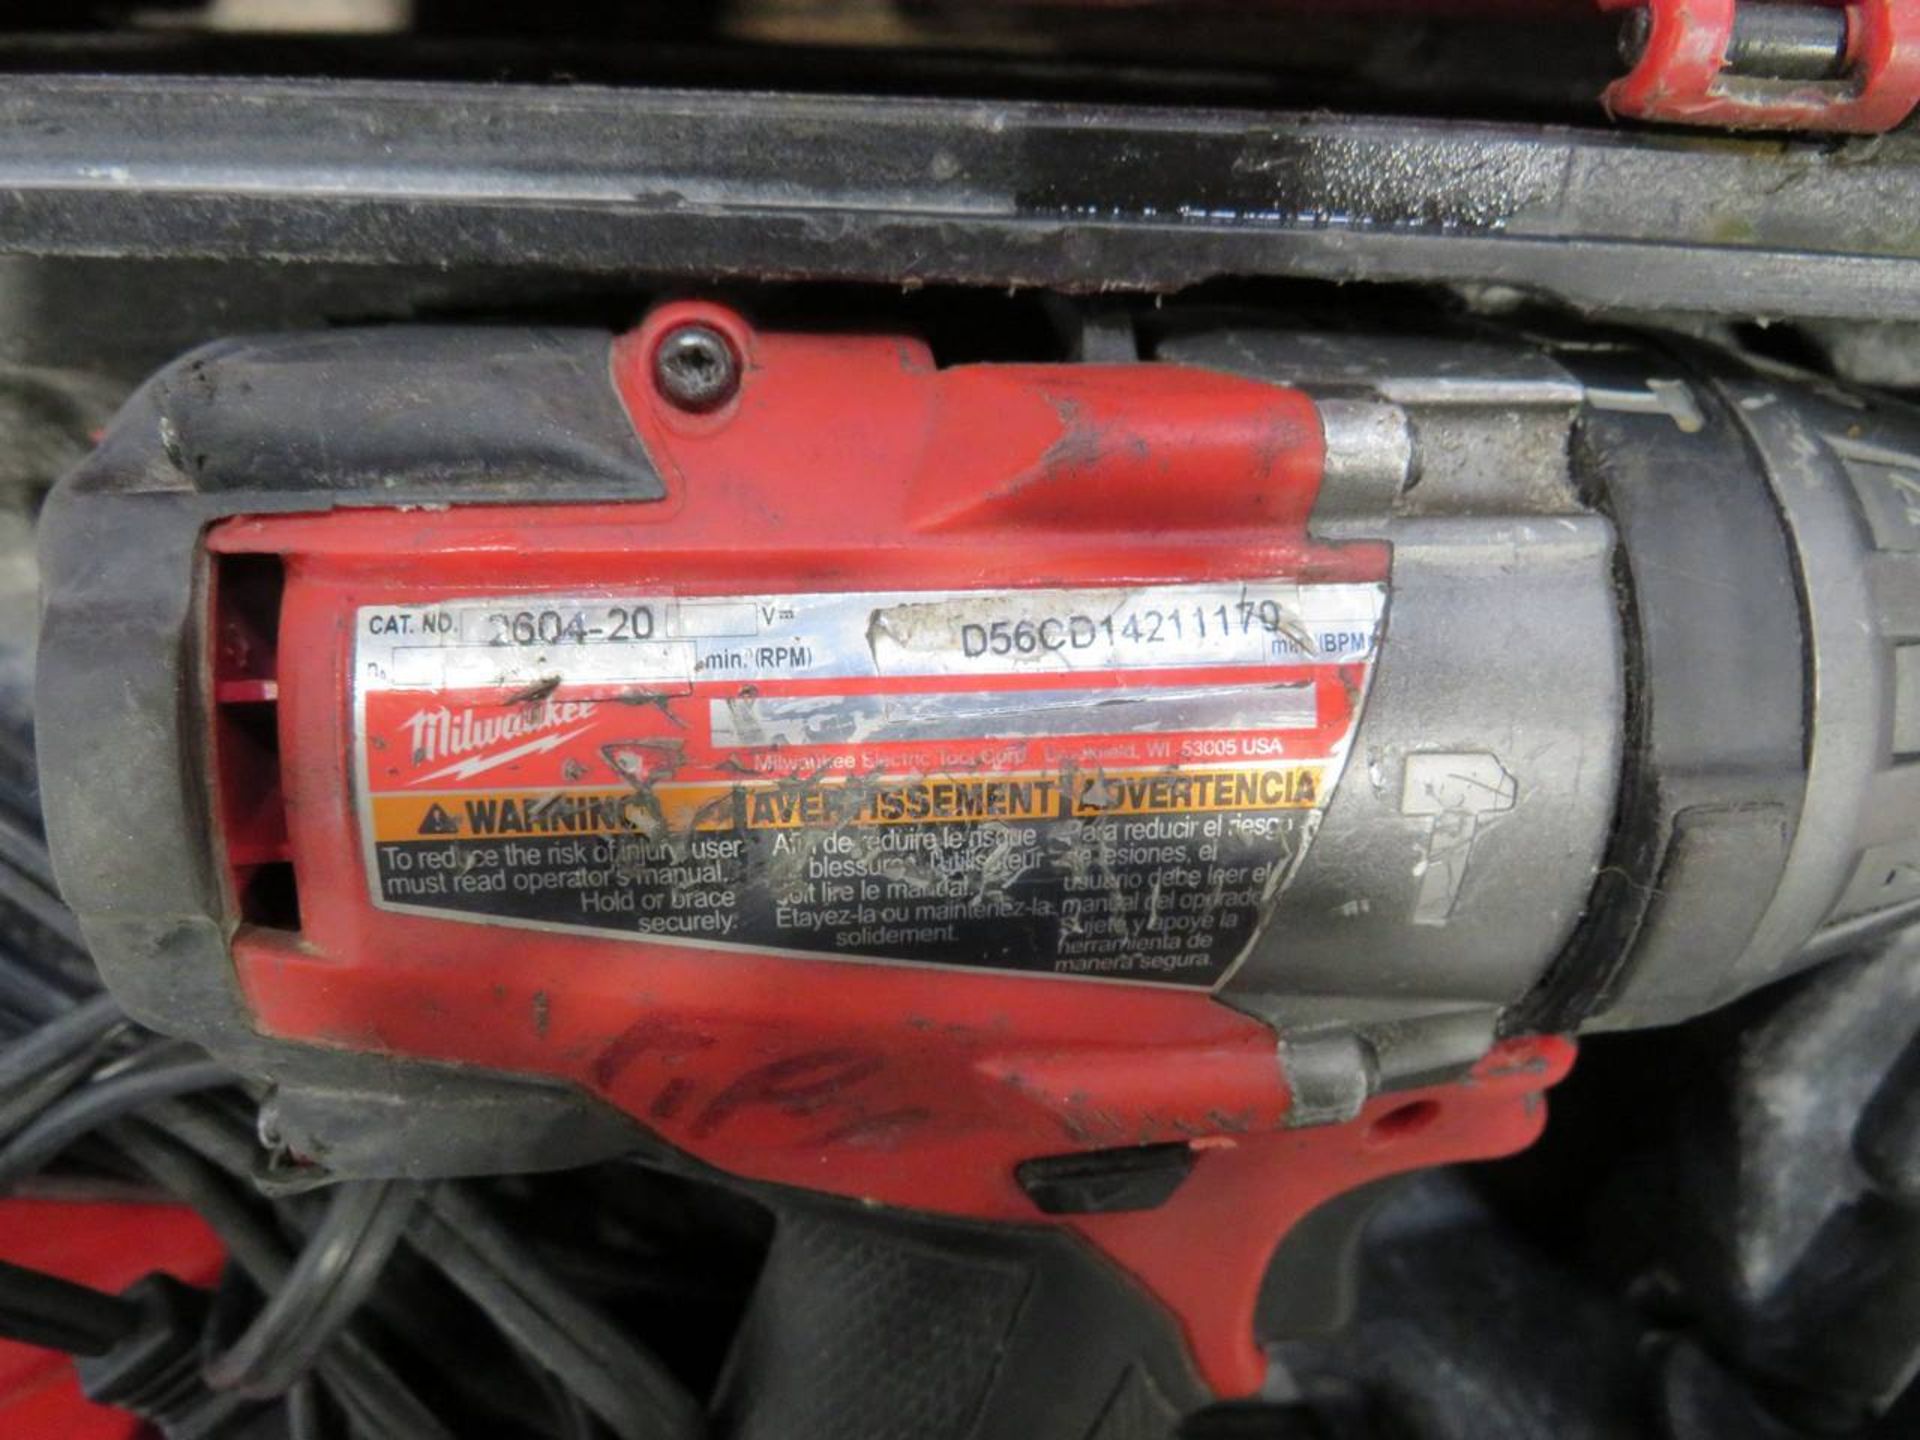 Milwaukee Cat 2604-20 M18 Fuel 1/2" Cordless Hammer Drill - Image 4 of 5